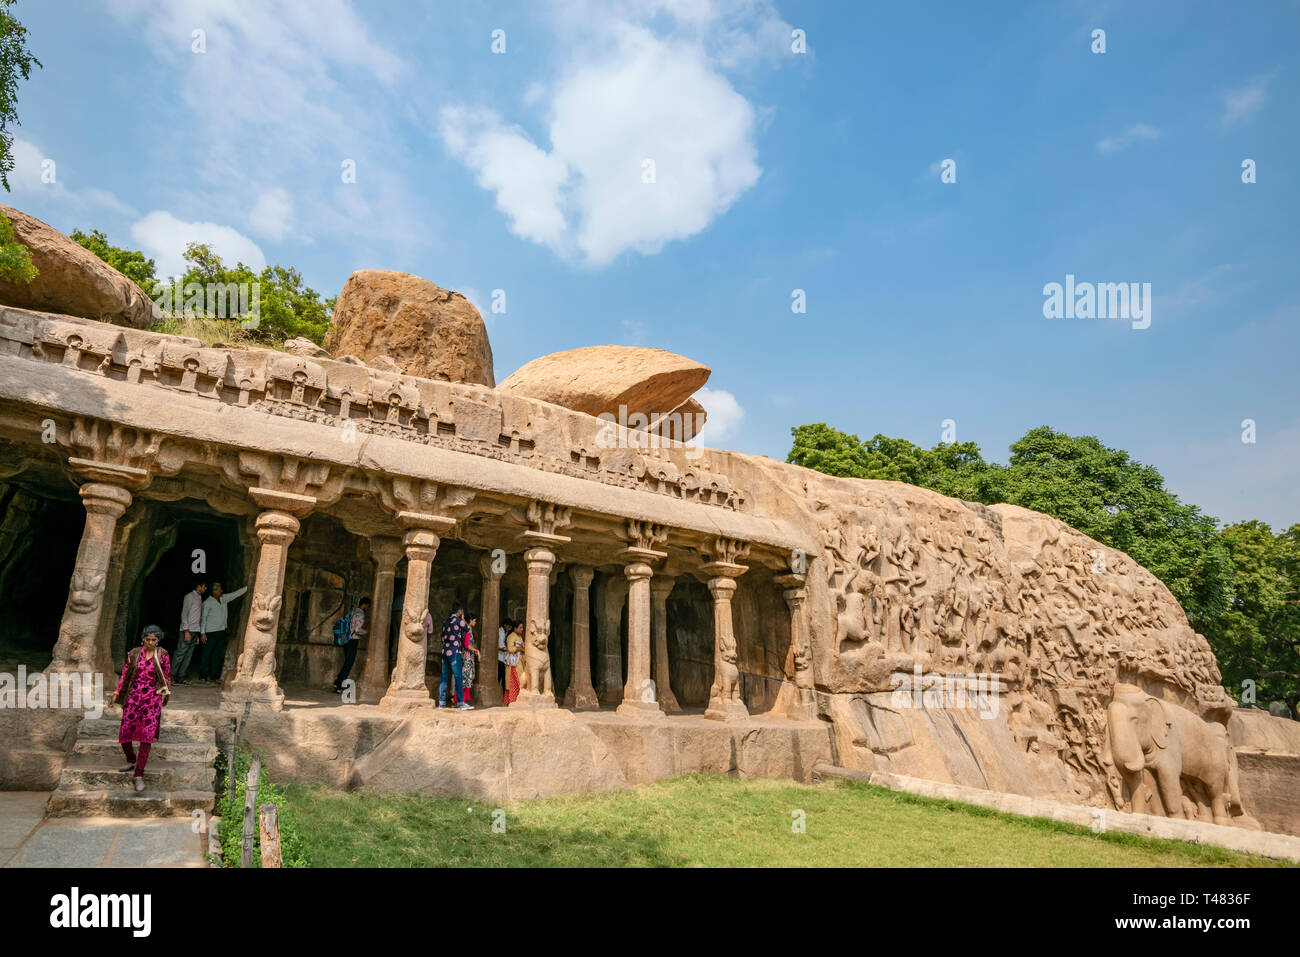 Horizontal view of the spectacular Arjuna's Penance at Mahabalipuram, India. Stock Photo